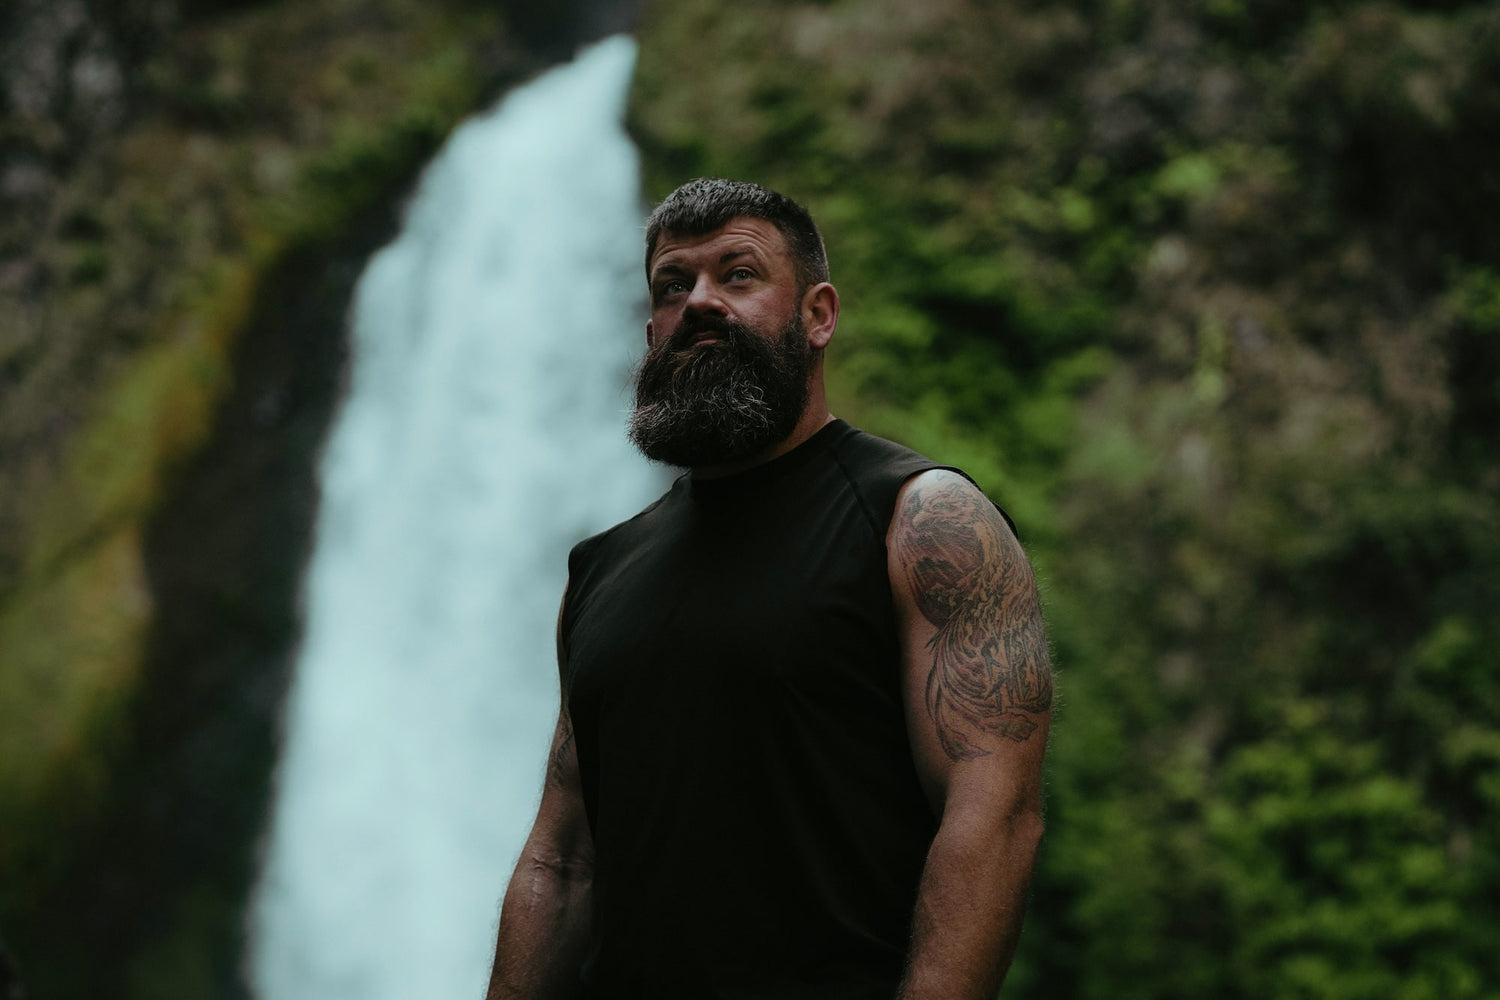 lance-reis-beard-waterfall-picture